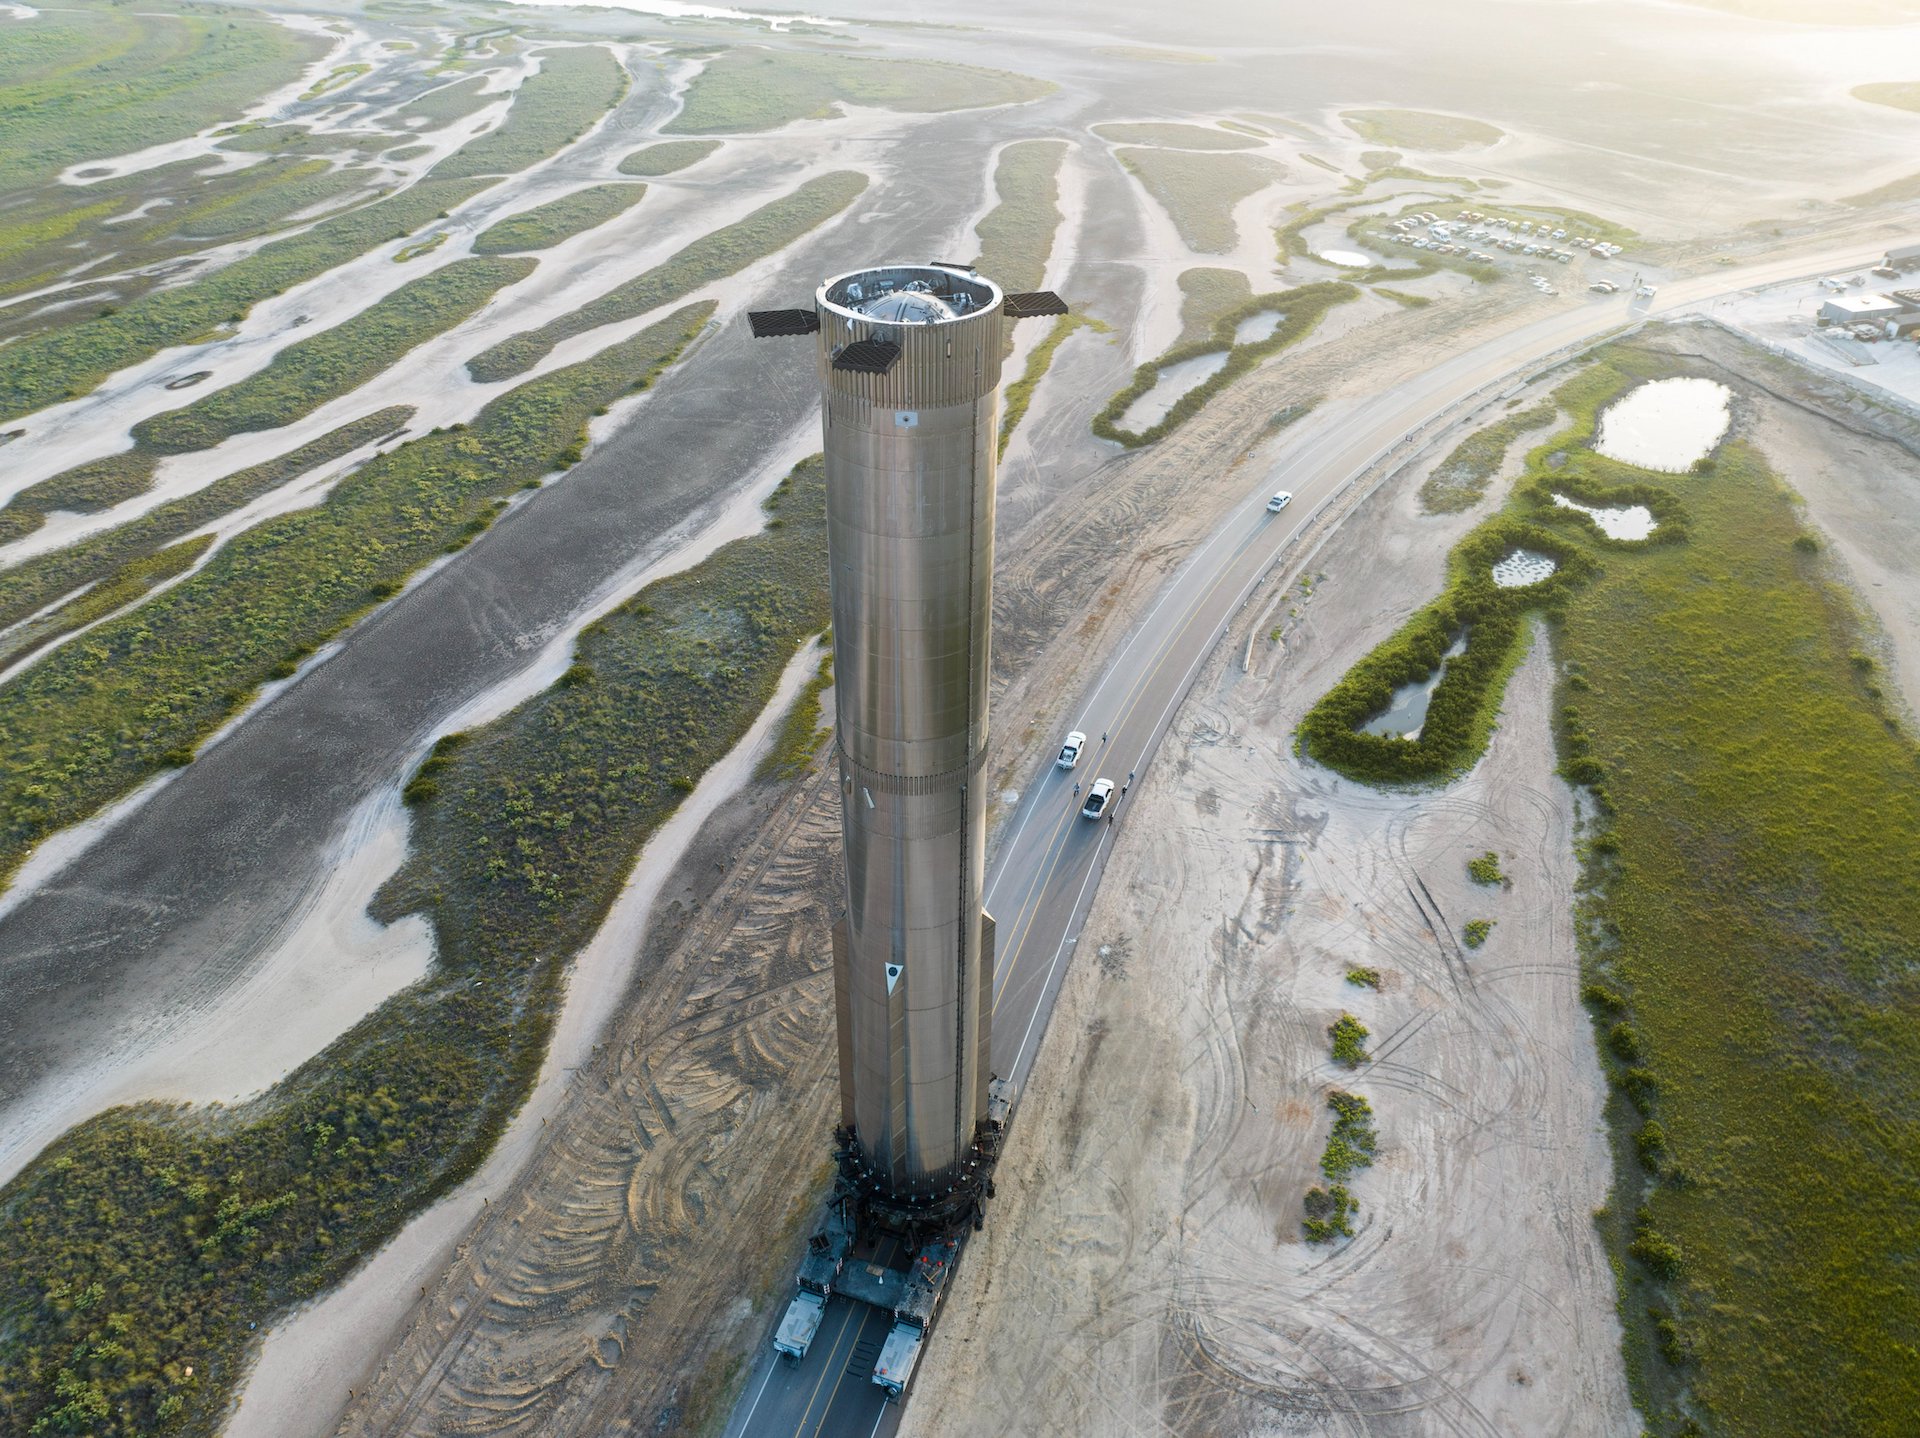 Menara penguat super berat yang sangat tinggi di atas lanskap Texas yang datar saat diangkut ke landasan peluncuran.